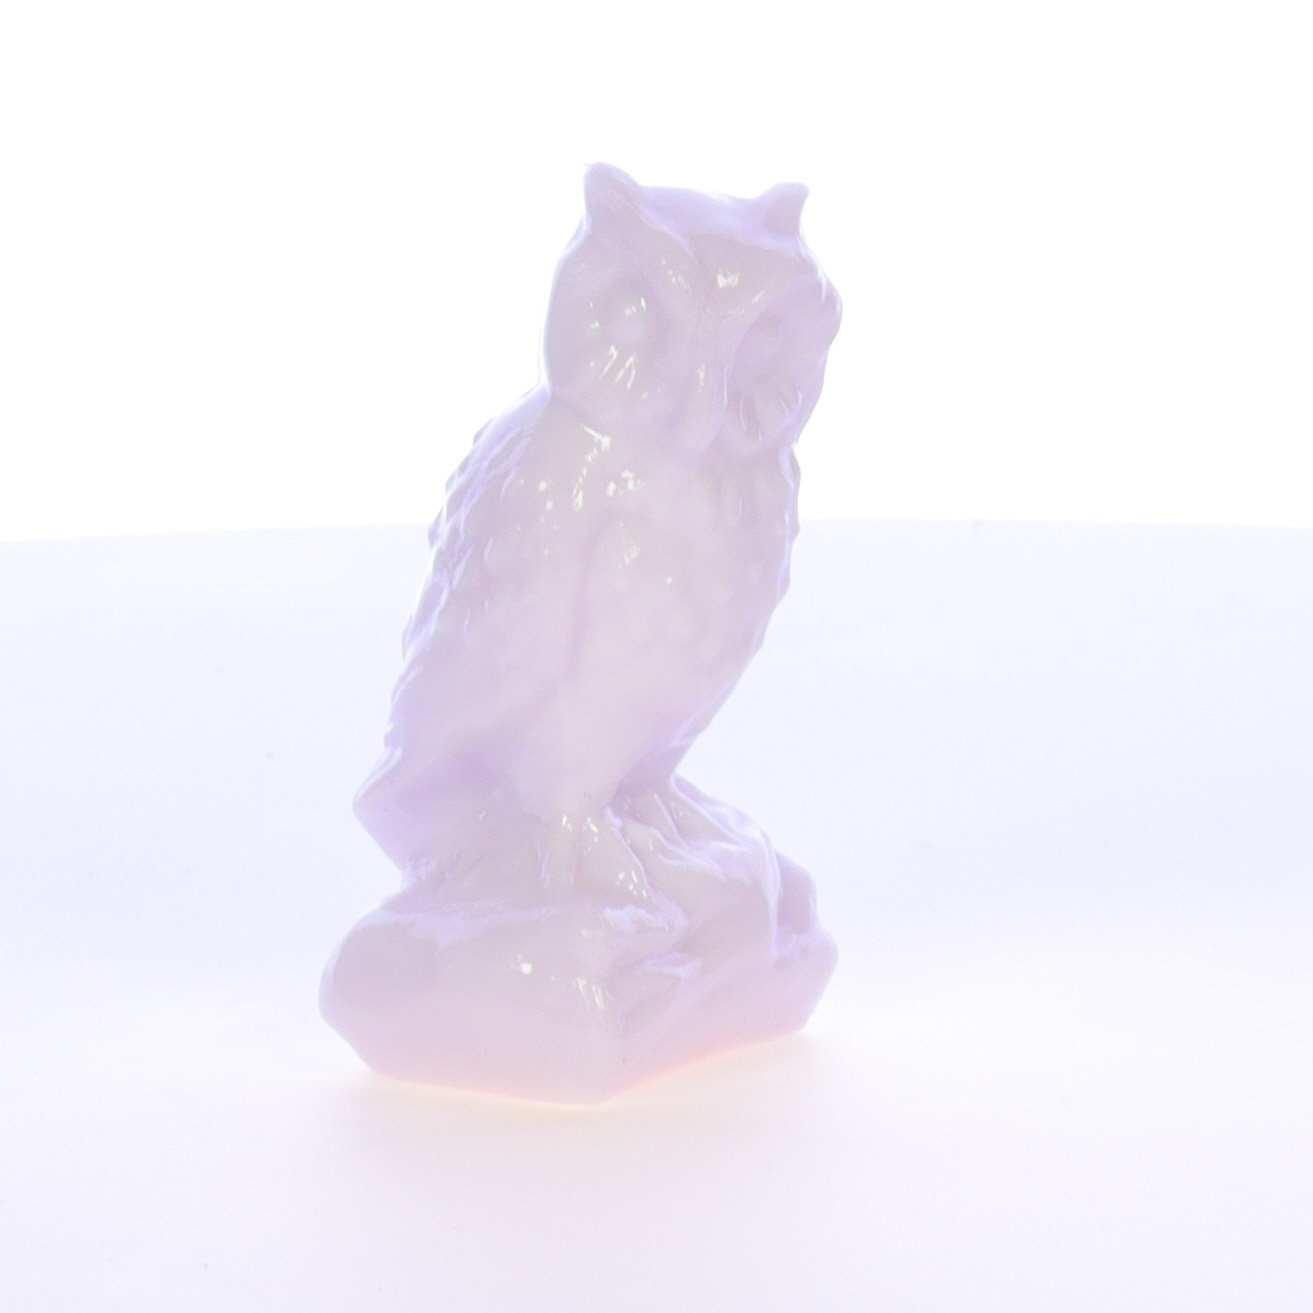 Boyds_Crystal_Art_Glass_Vintage_Owl_Sculpture_3.5_Inch_Figurine_1979_SKU_076_01